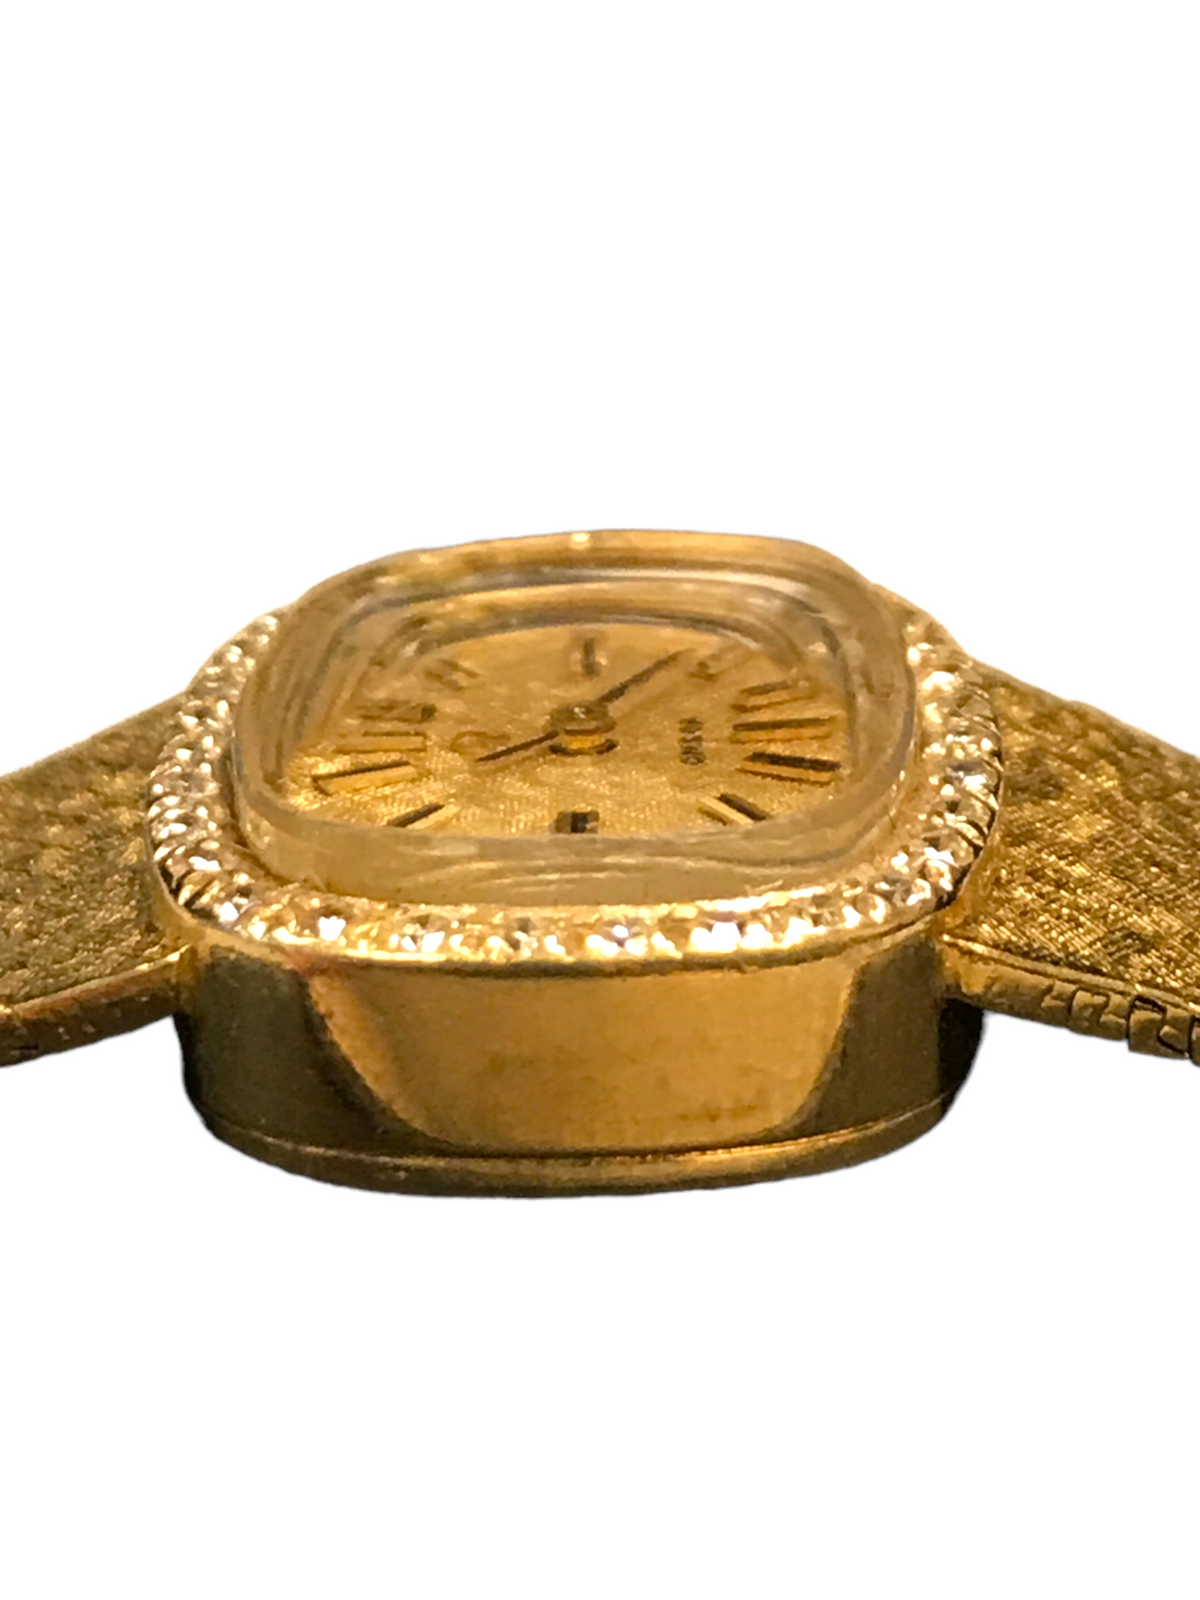 Vintage Omega 14k Yellow Gold Diamond Ladies Watch